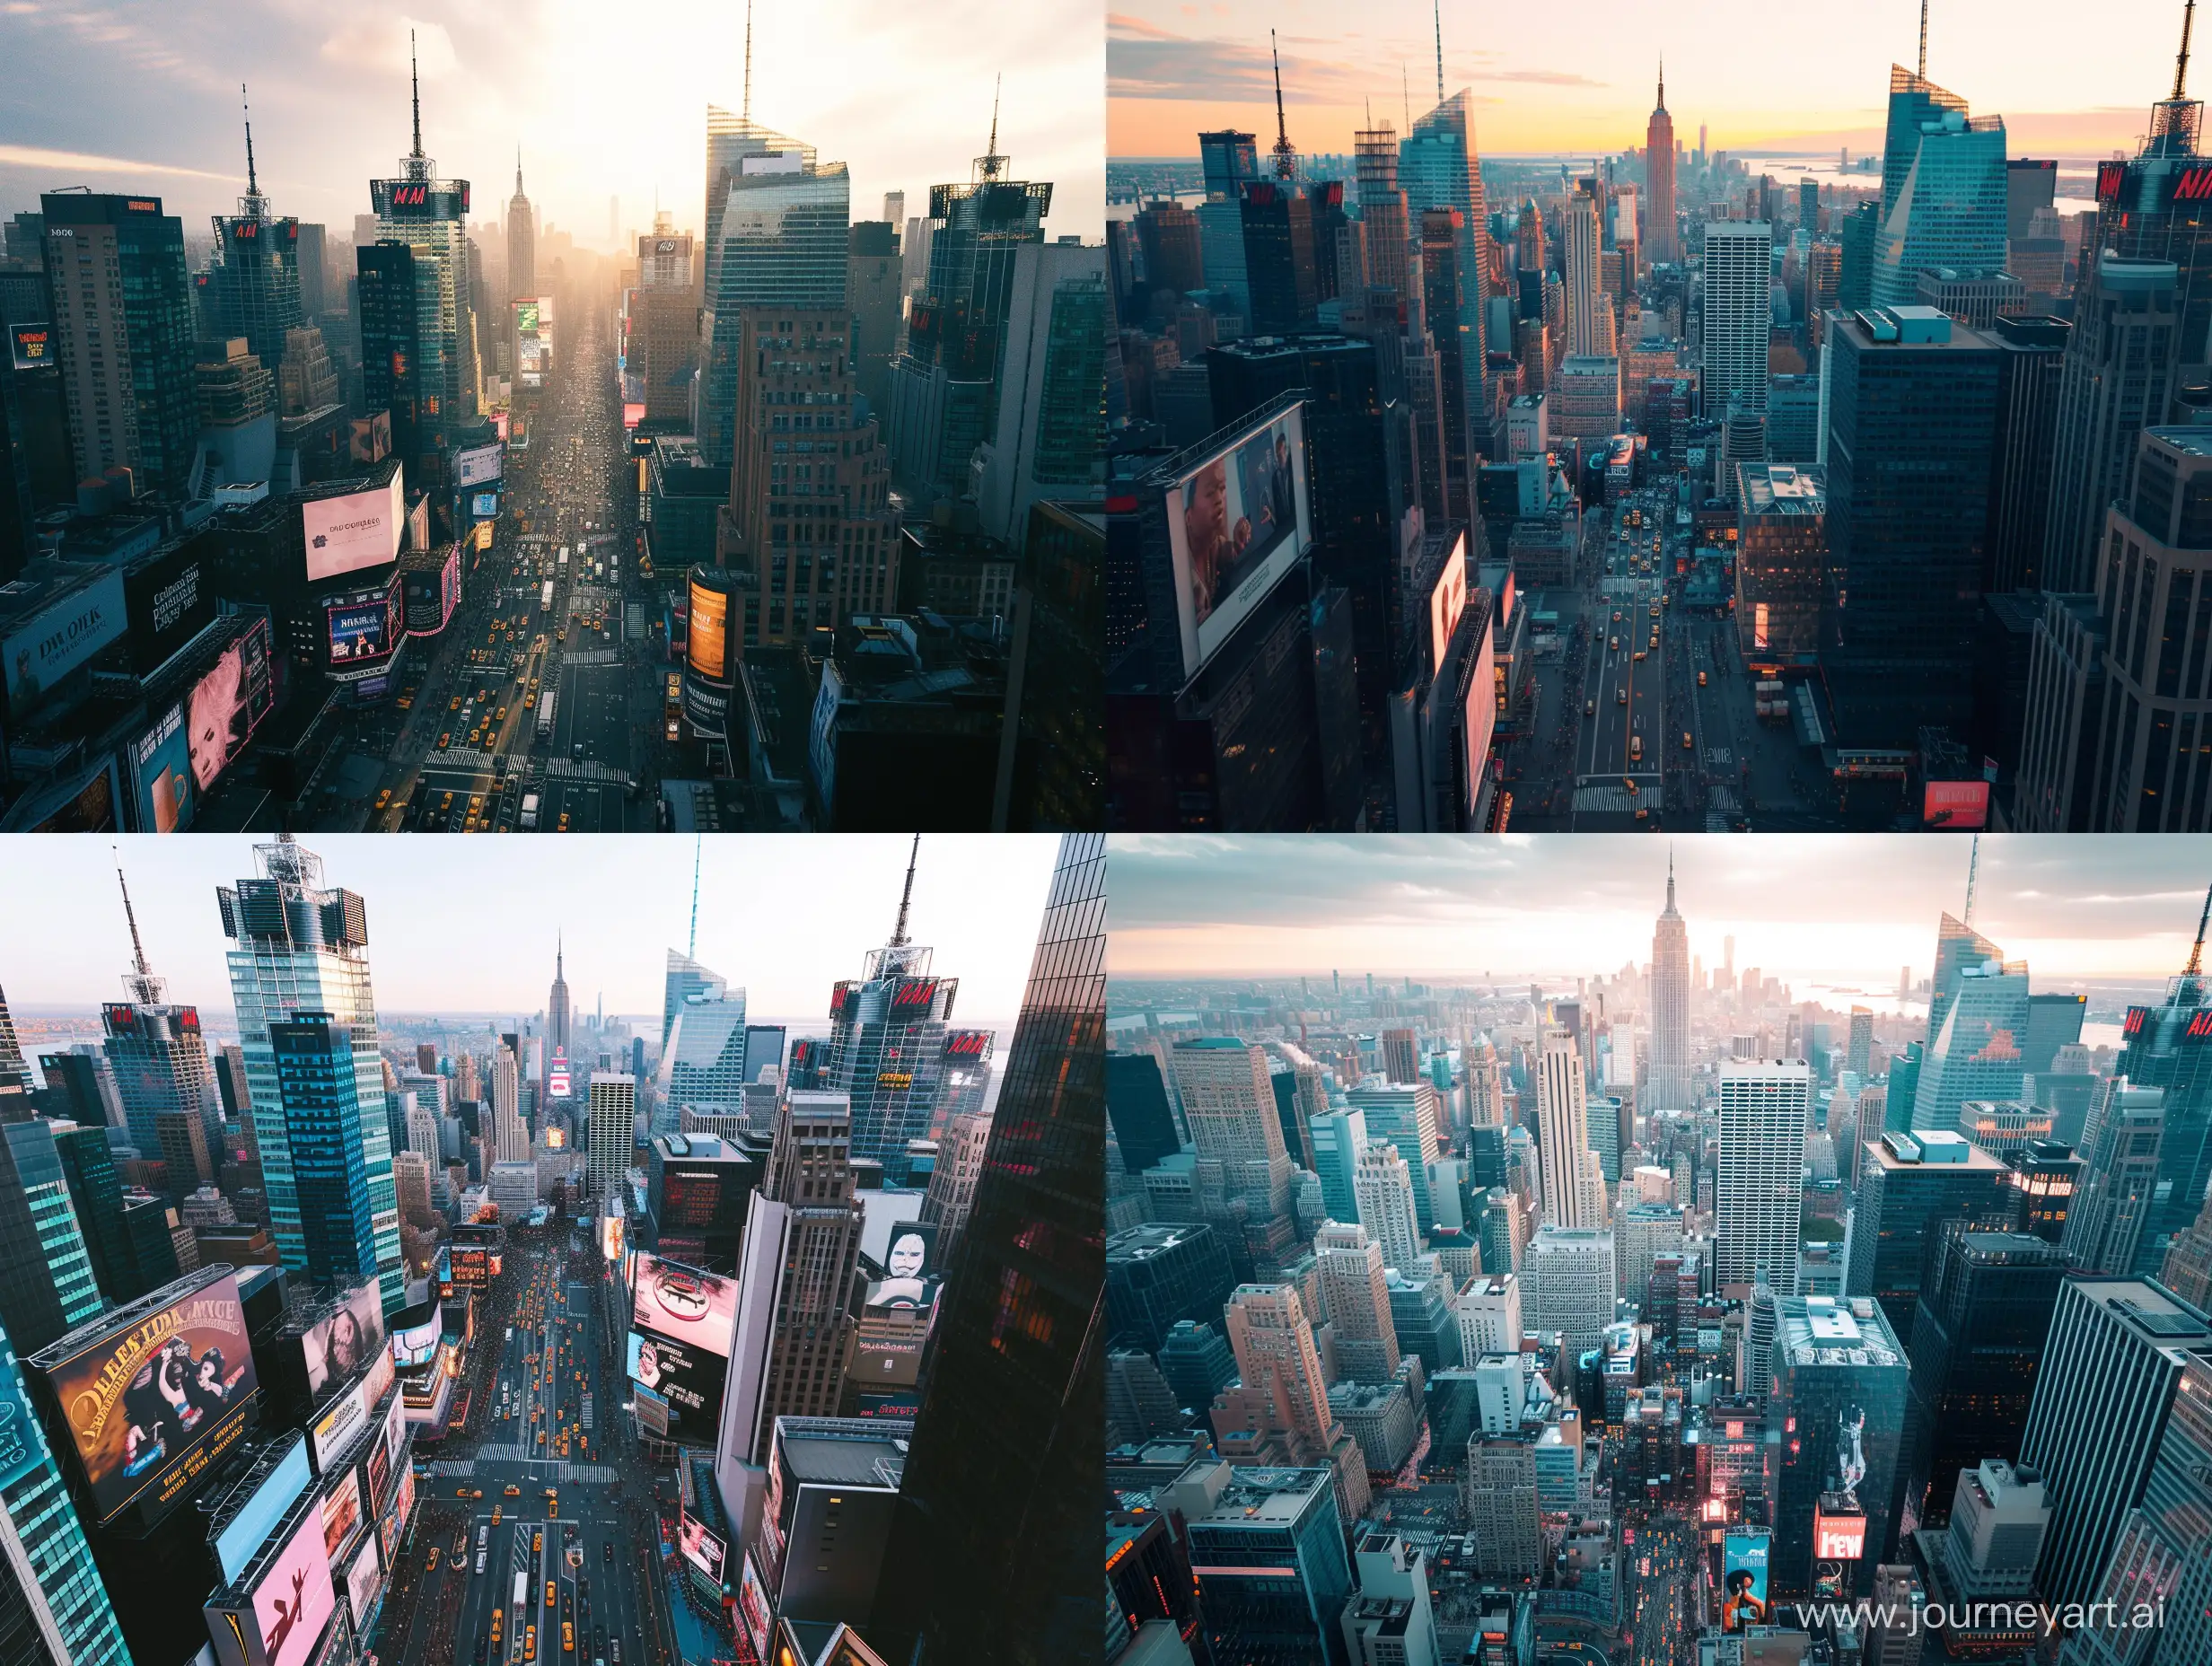 photo of new york skyline, kodak gold 200, natural lighting, drone view, billboards, busy city environment